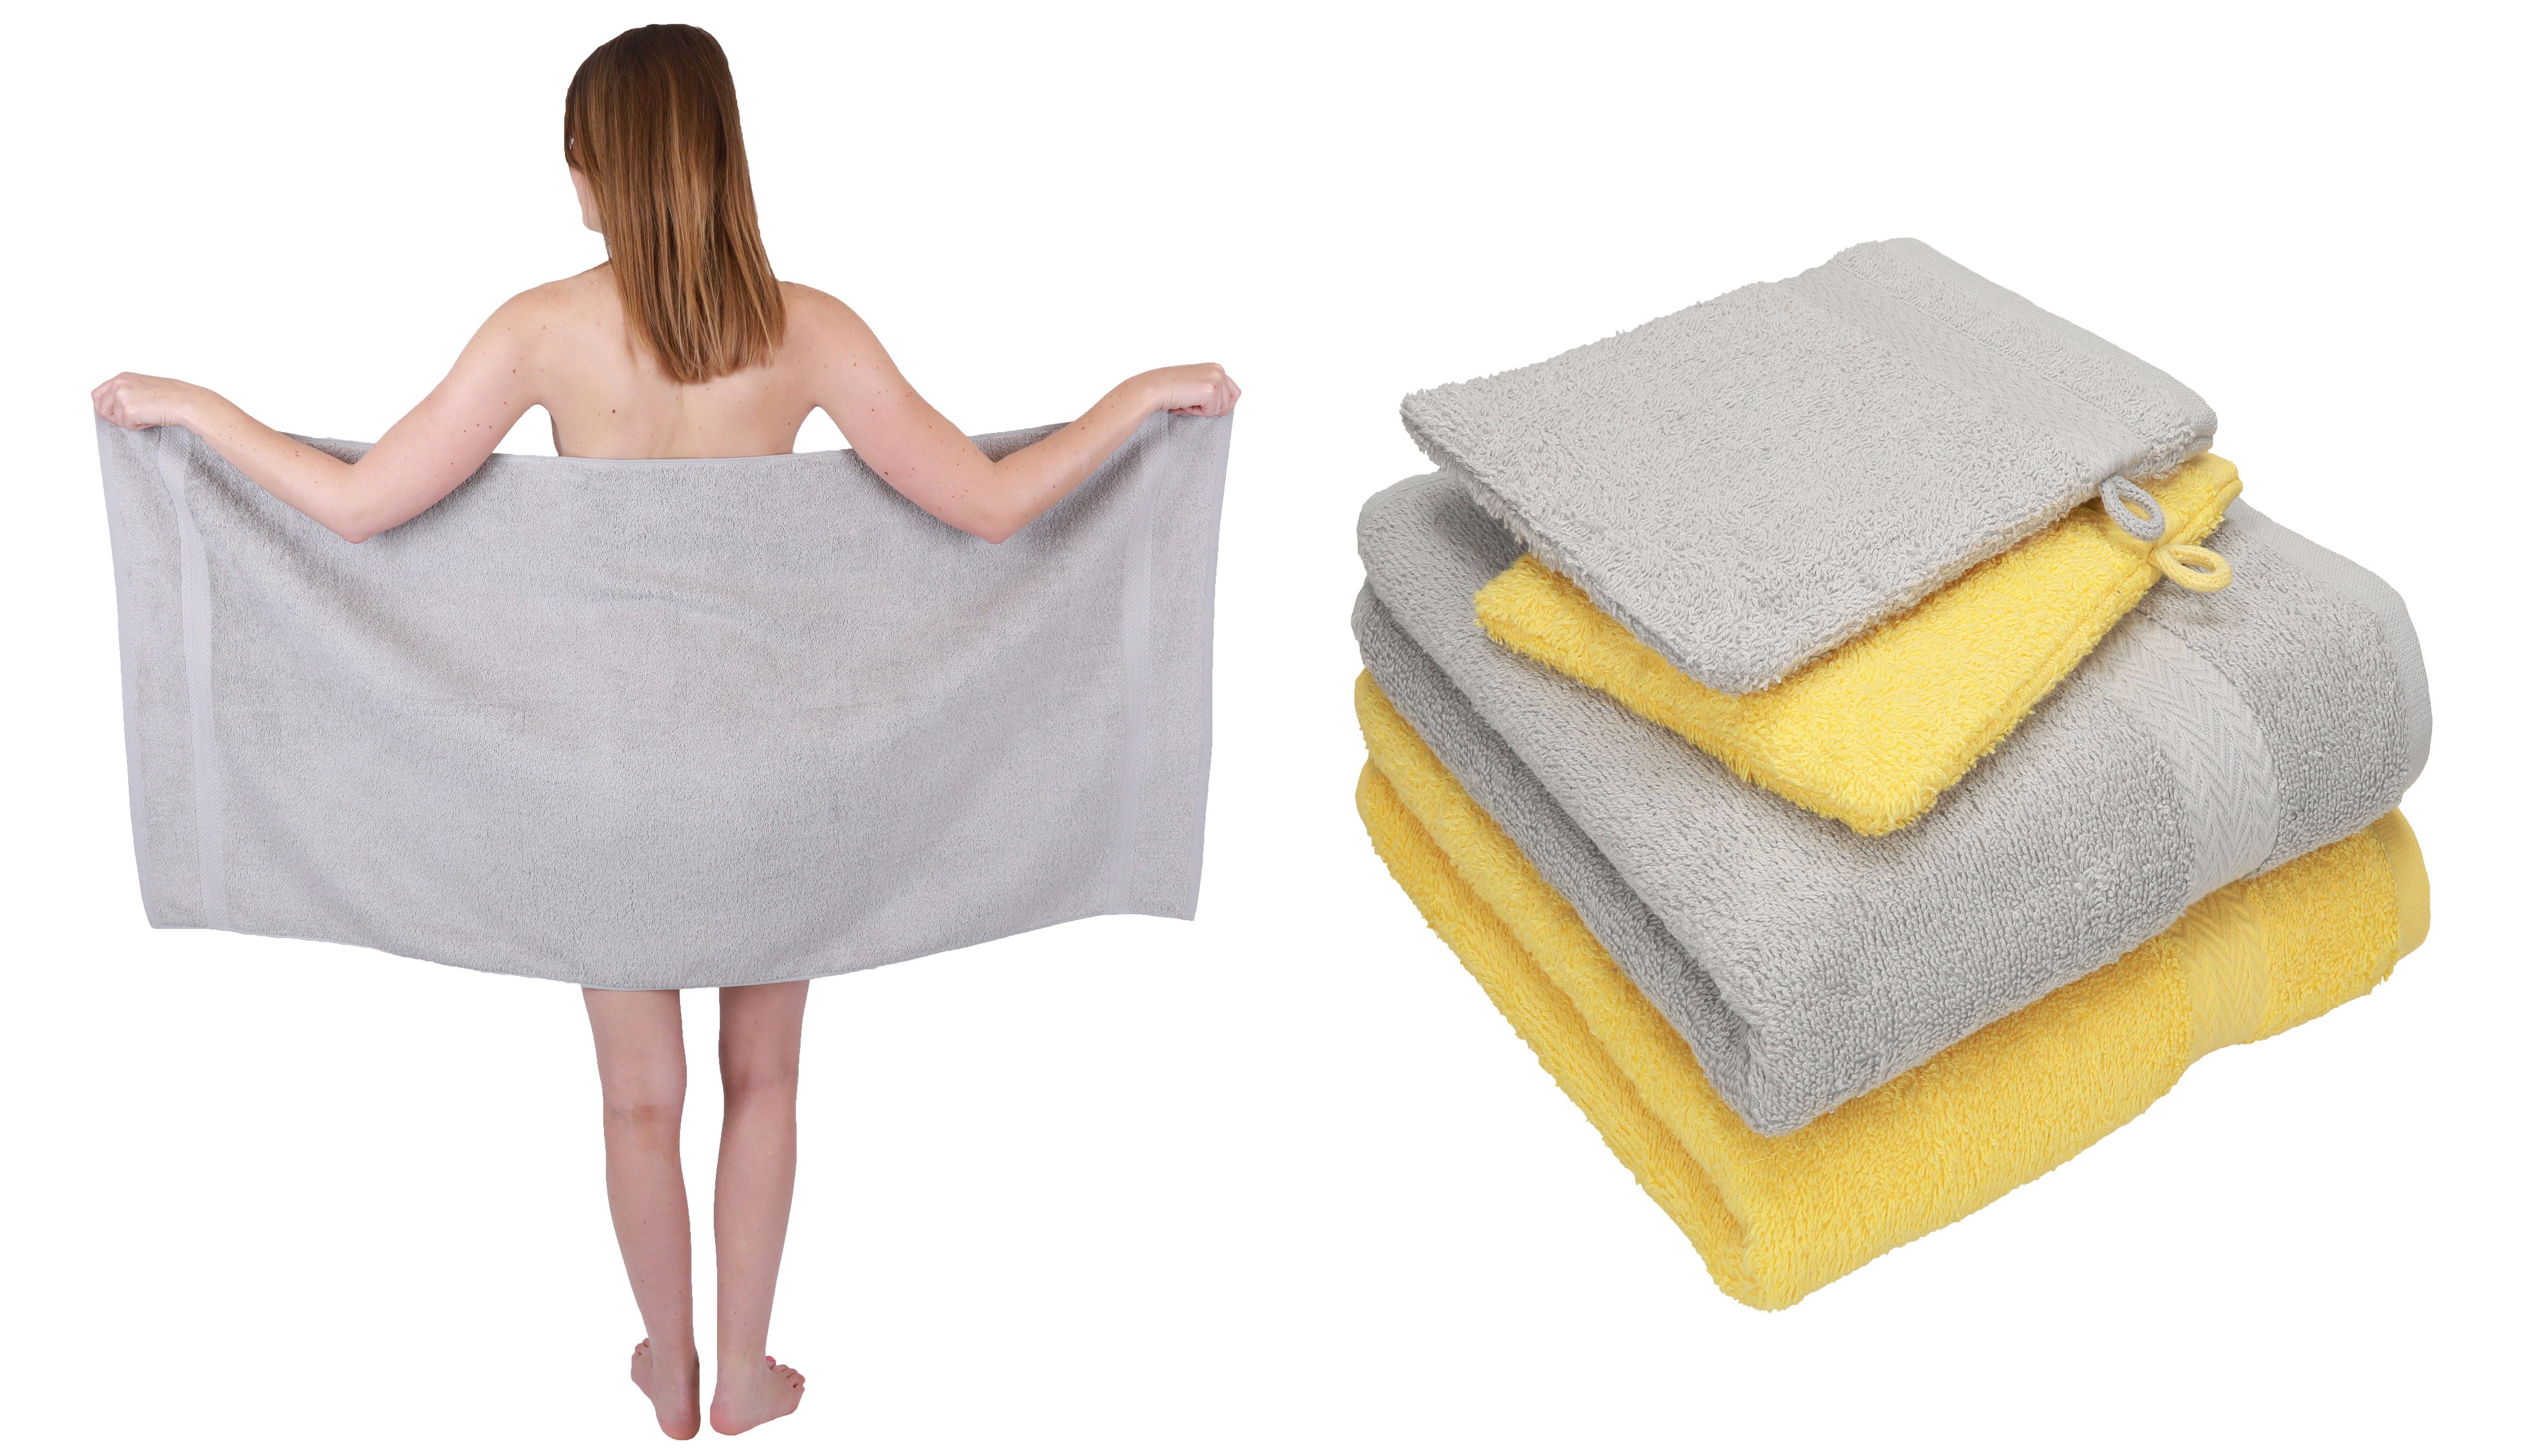 Betz Handtuch Set 5 TLG. Handtuch Set Single Pack 100% Baumwolle 1 Duschtuch 2 Handtücher 2 Waschhandschuhe, 100% Baumwolle silbergrau-gelb | Handtuch-Sets